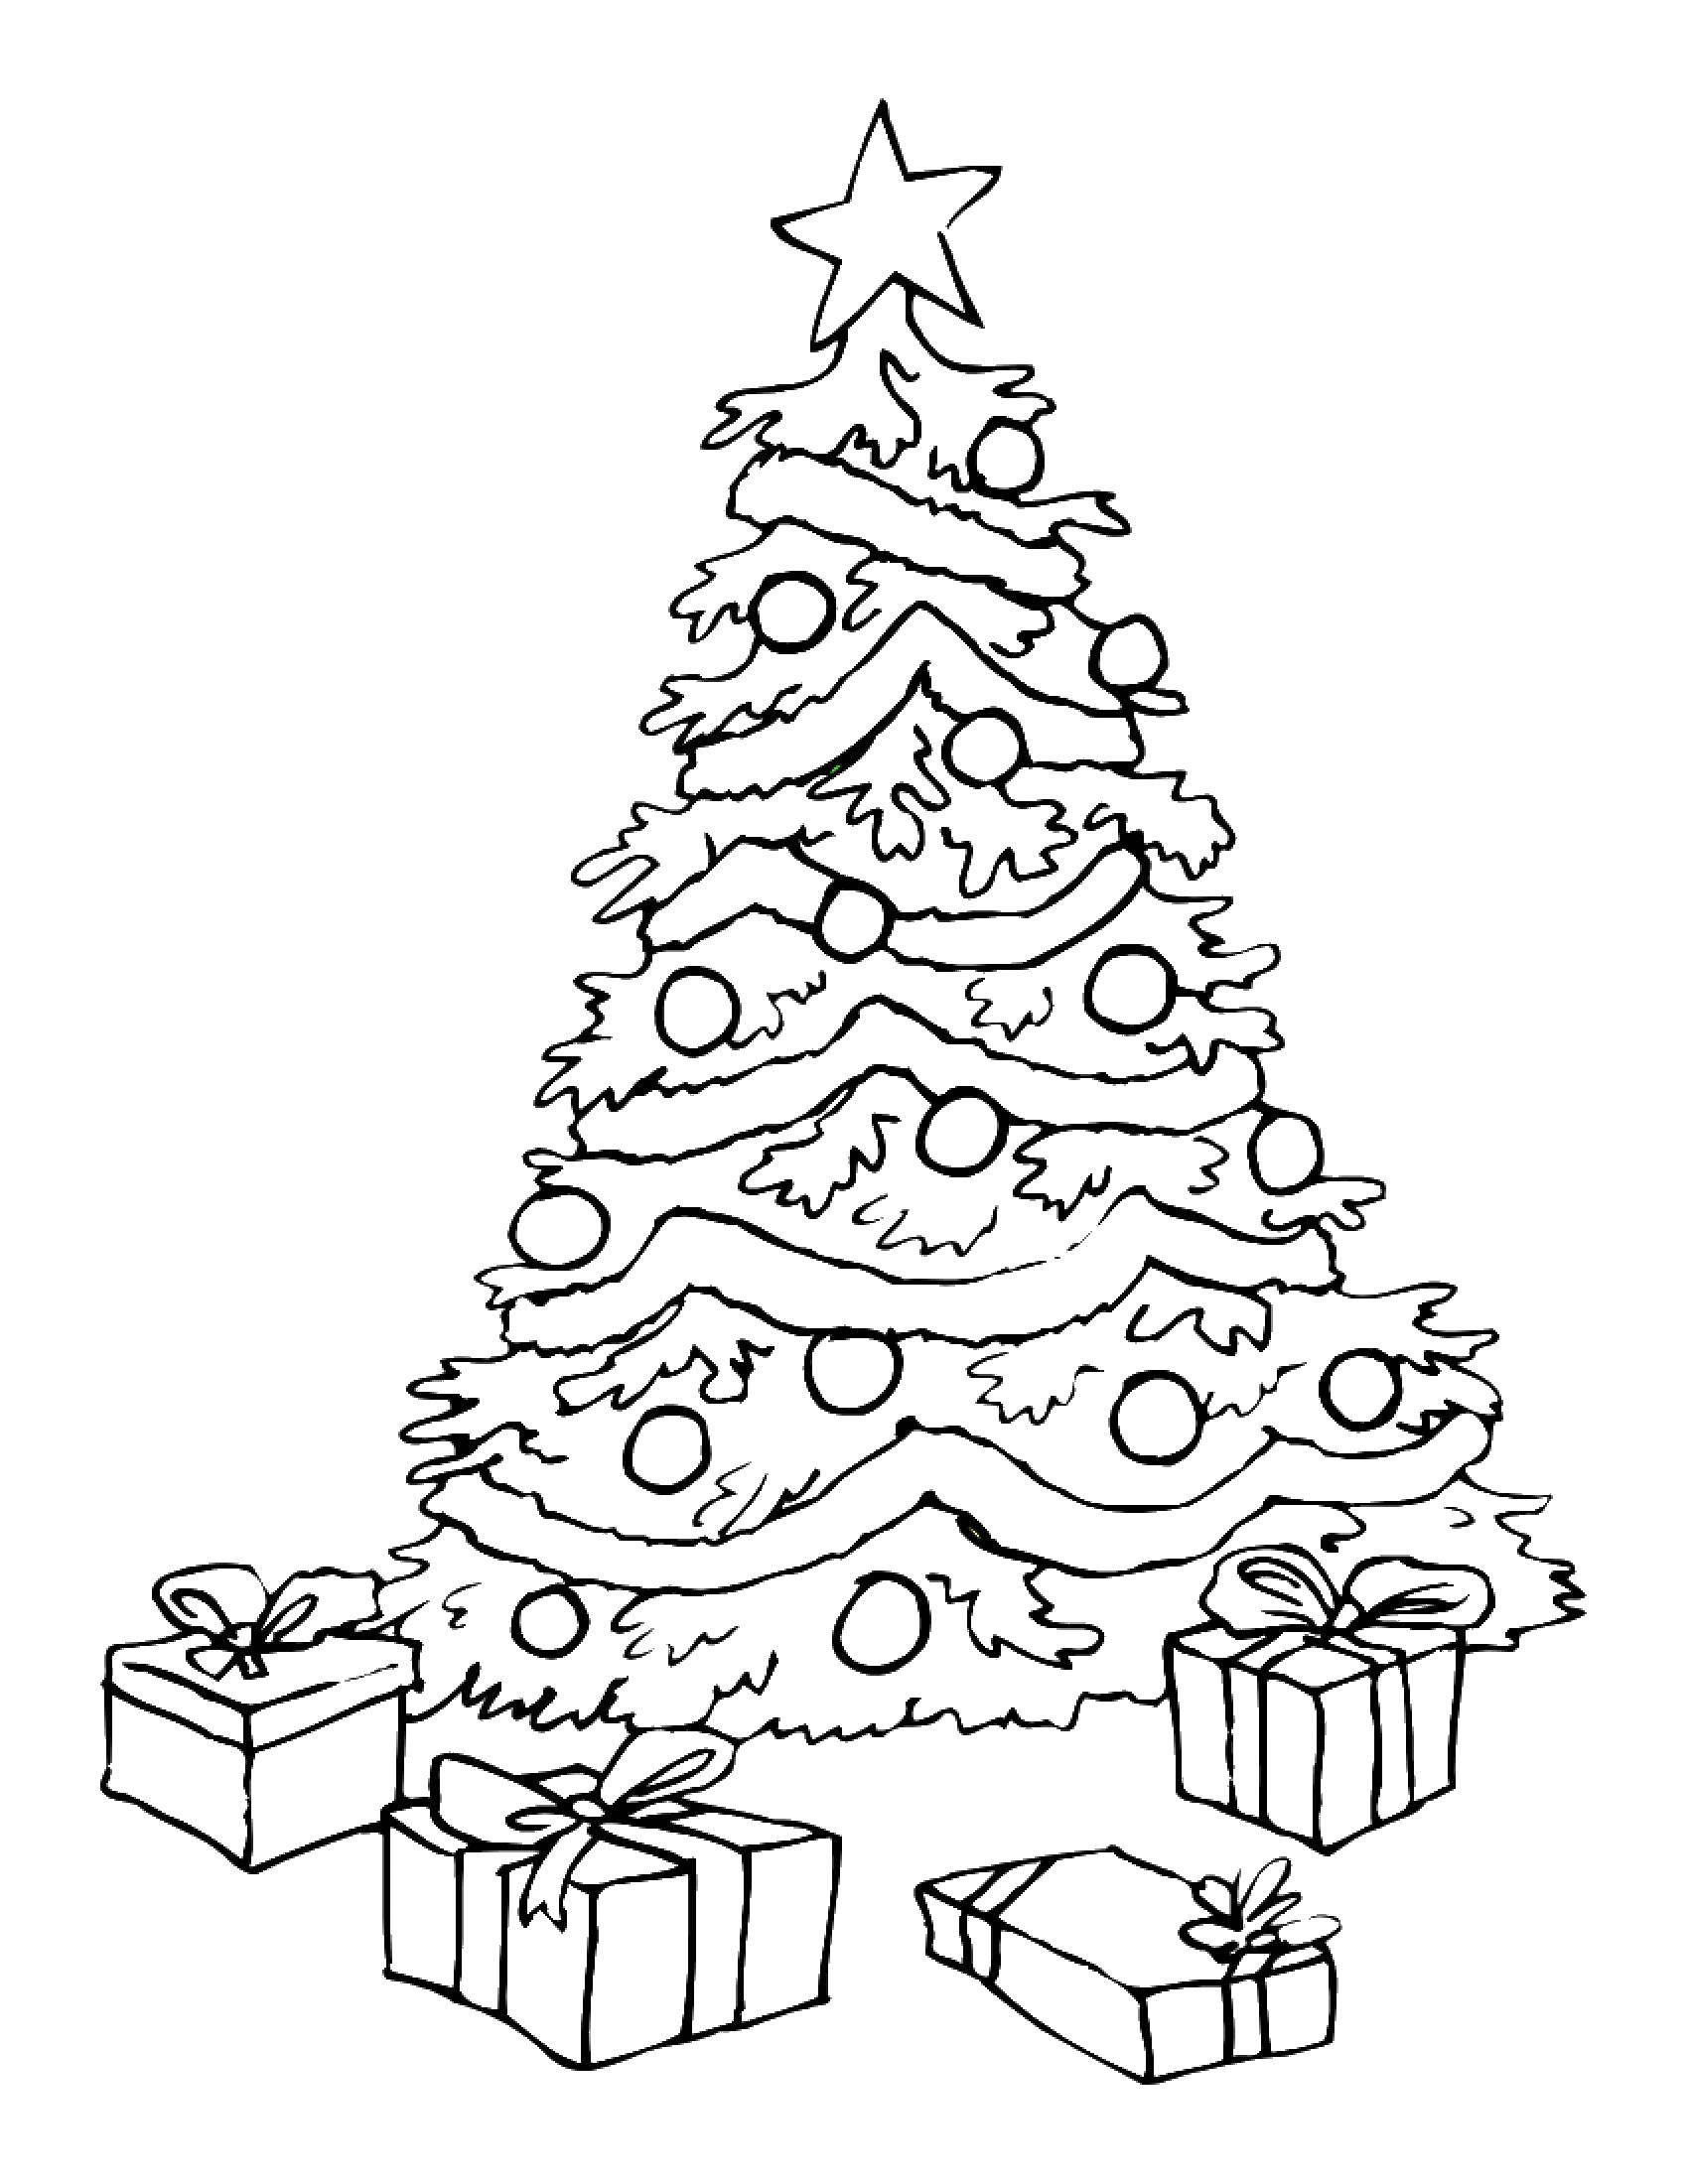 Coloring Christmas tree. Category Christmas. Tags:  Christmas, child, Christmas tree.